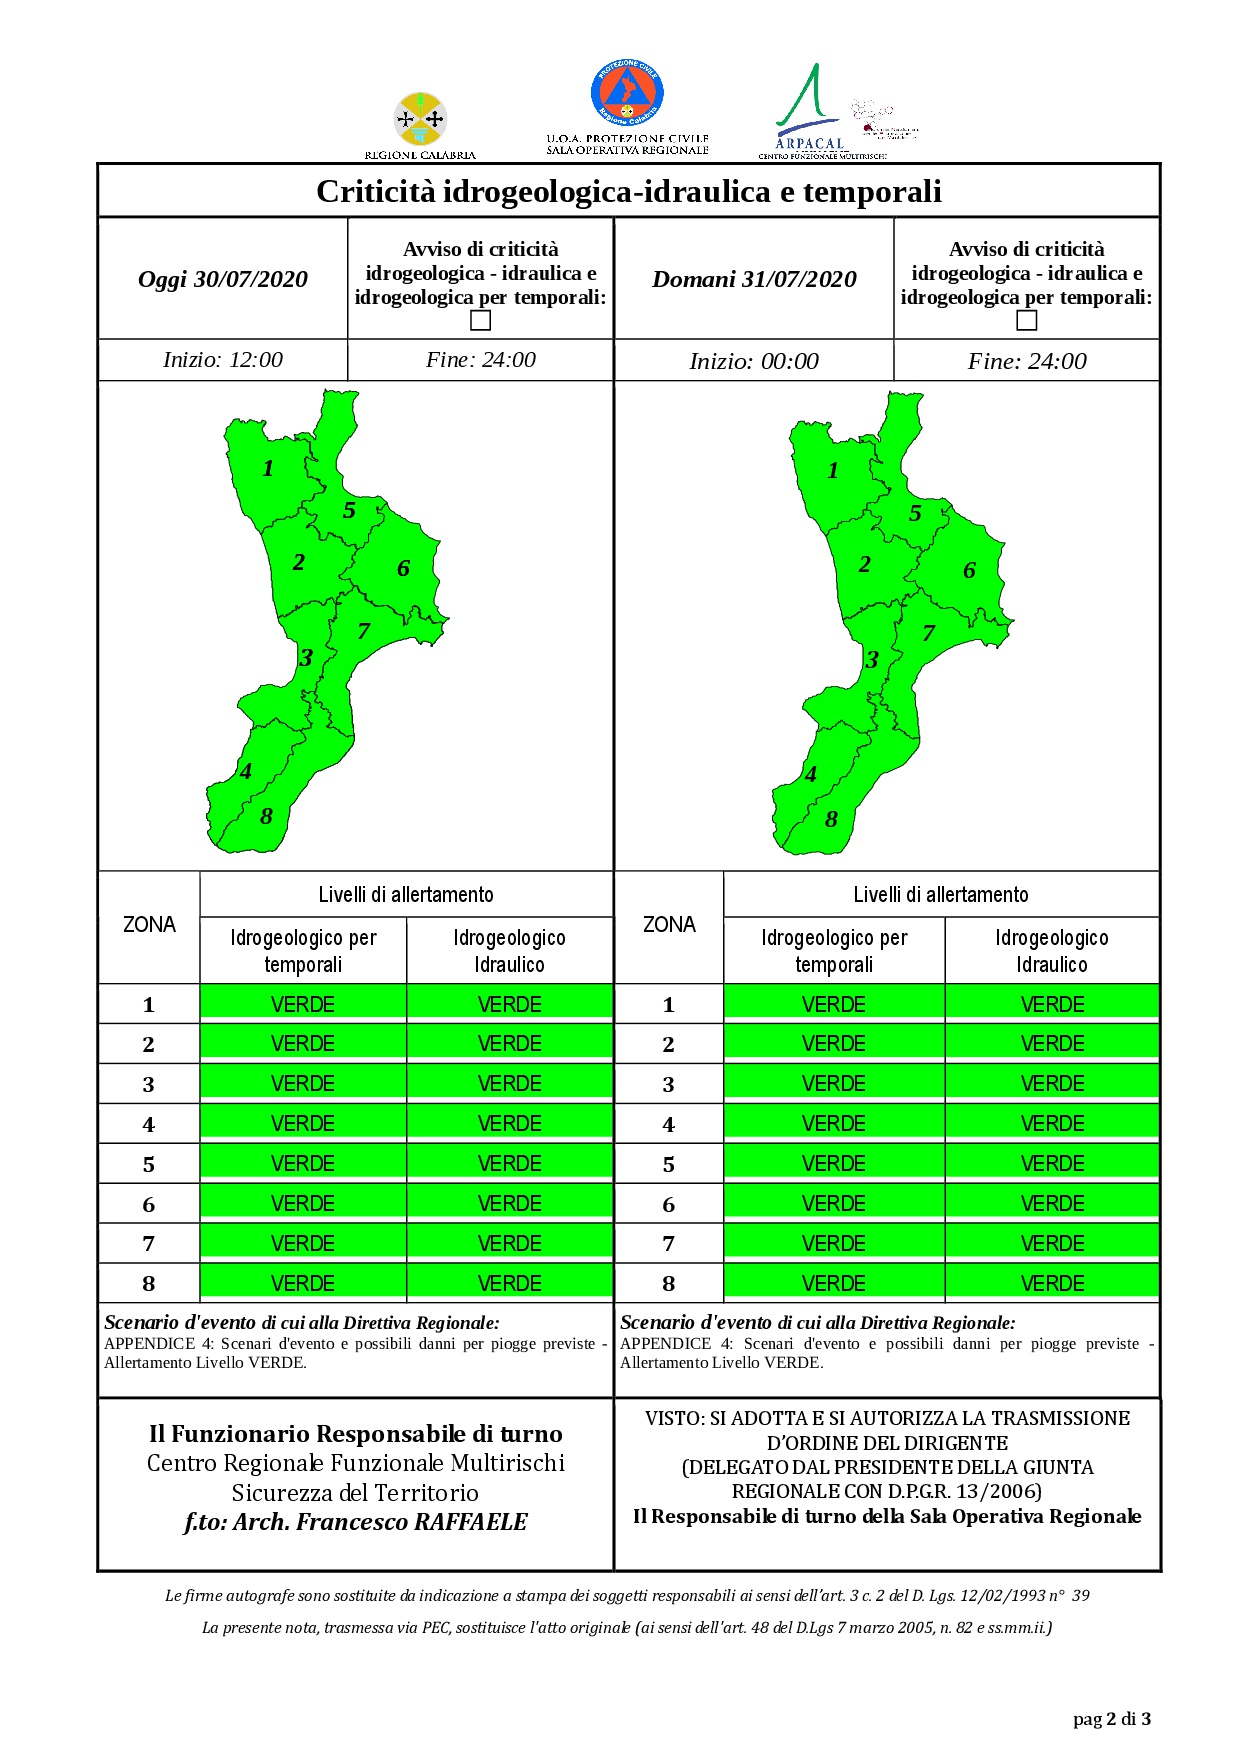 Criticità idrogeologica-idraulica e temporali in Calabria 30-07-2020